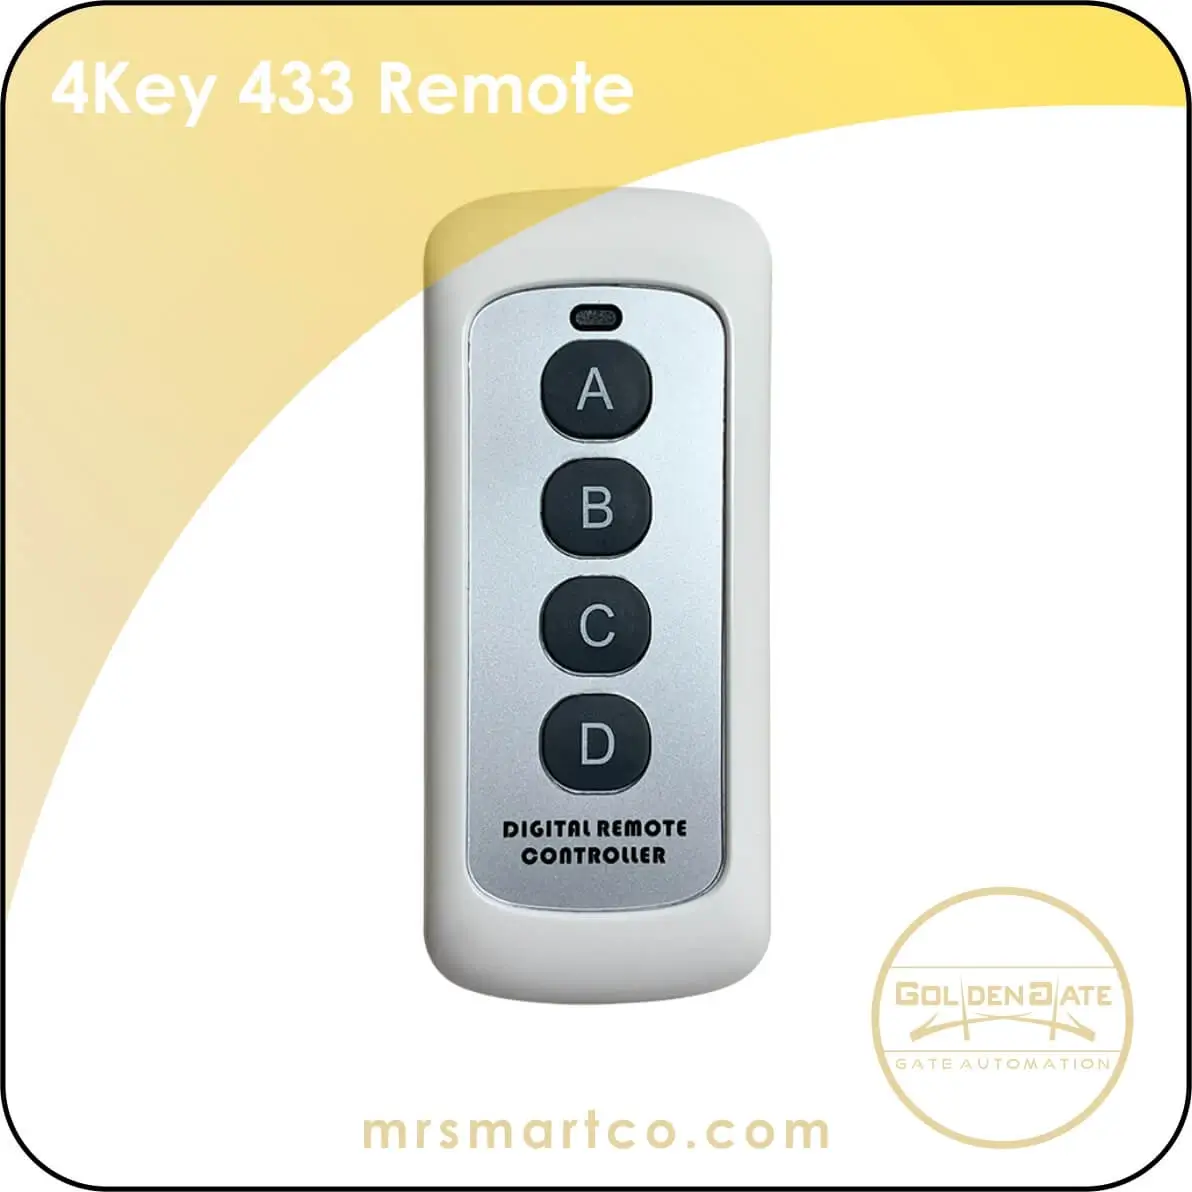 4Key 433 Remote